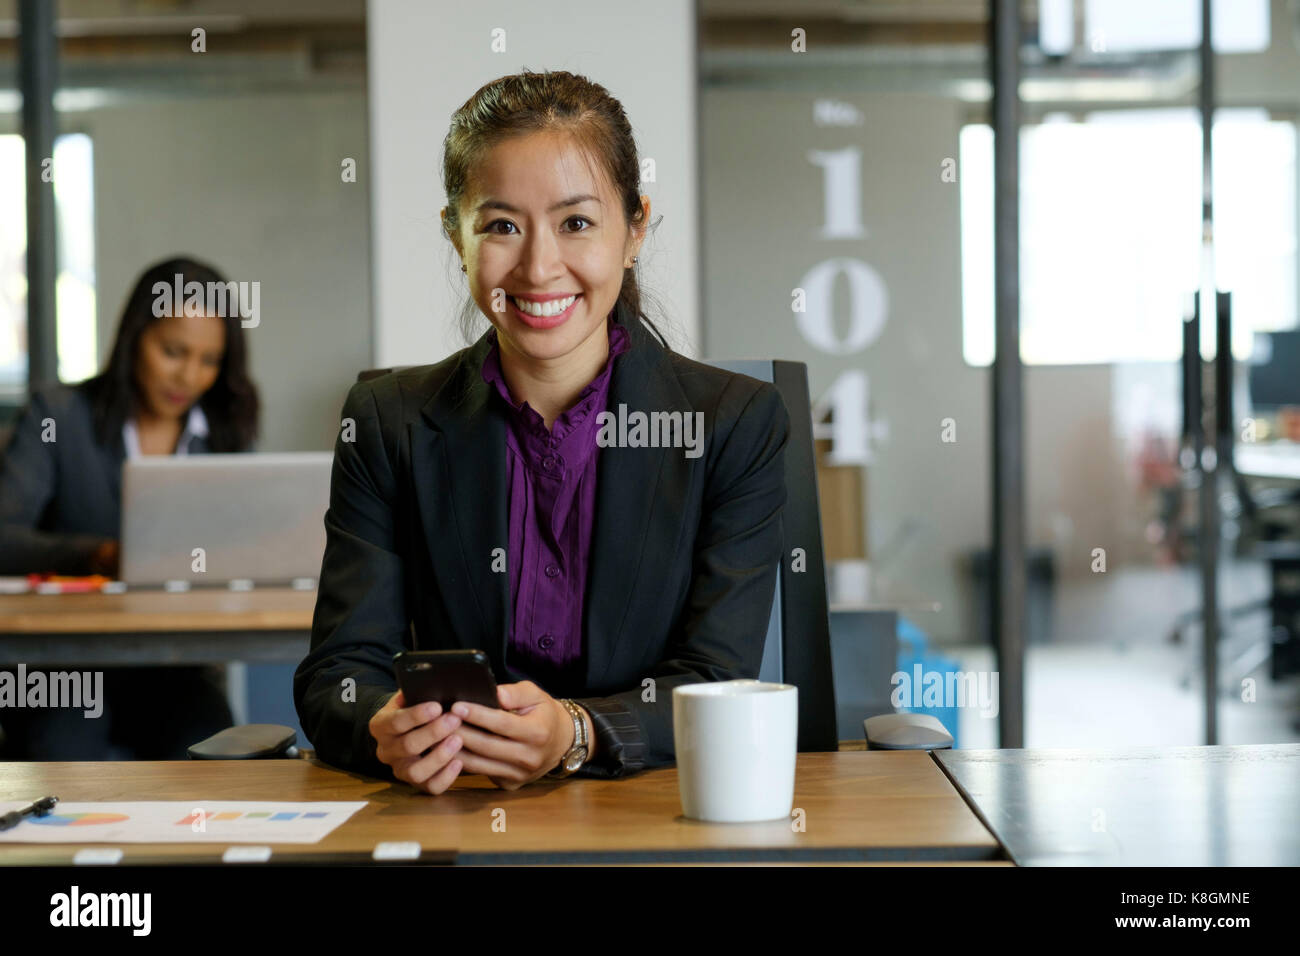 Portrait of businesswomen sitting at desk, holding smartphone, smiling Stock Photo